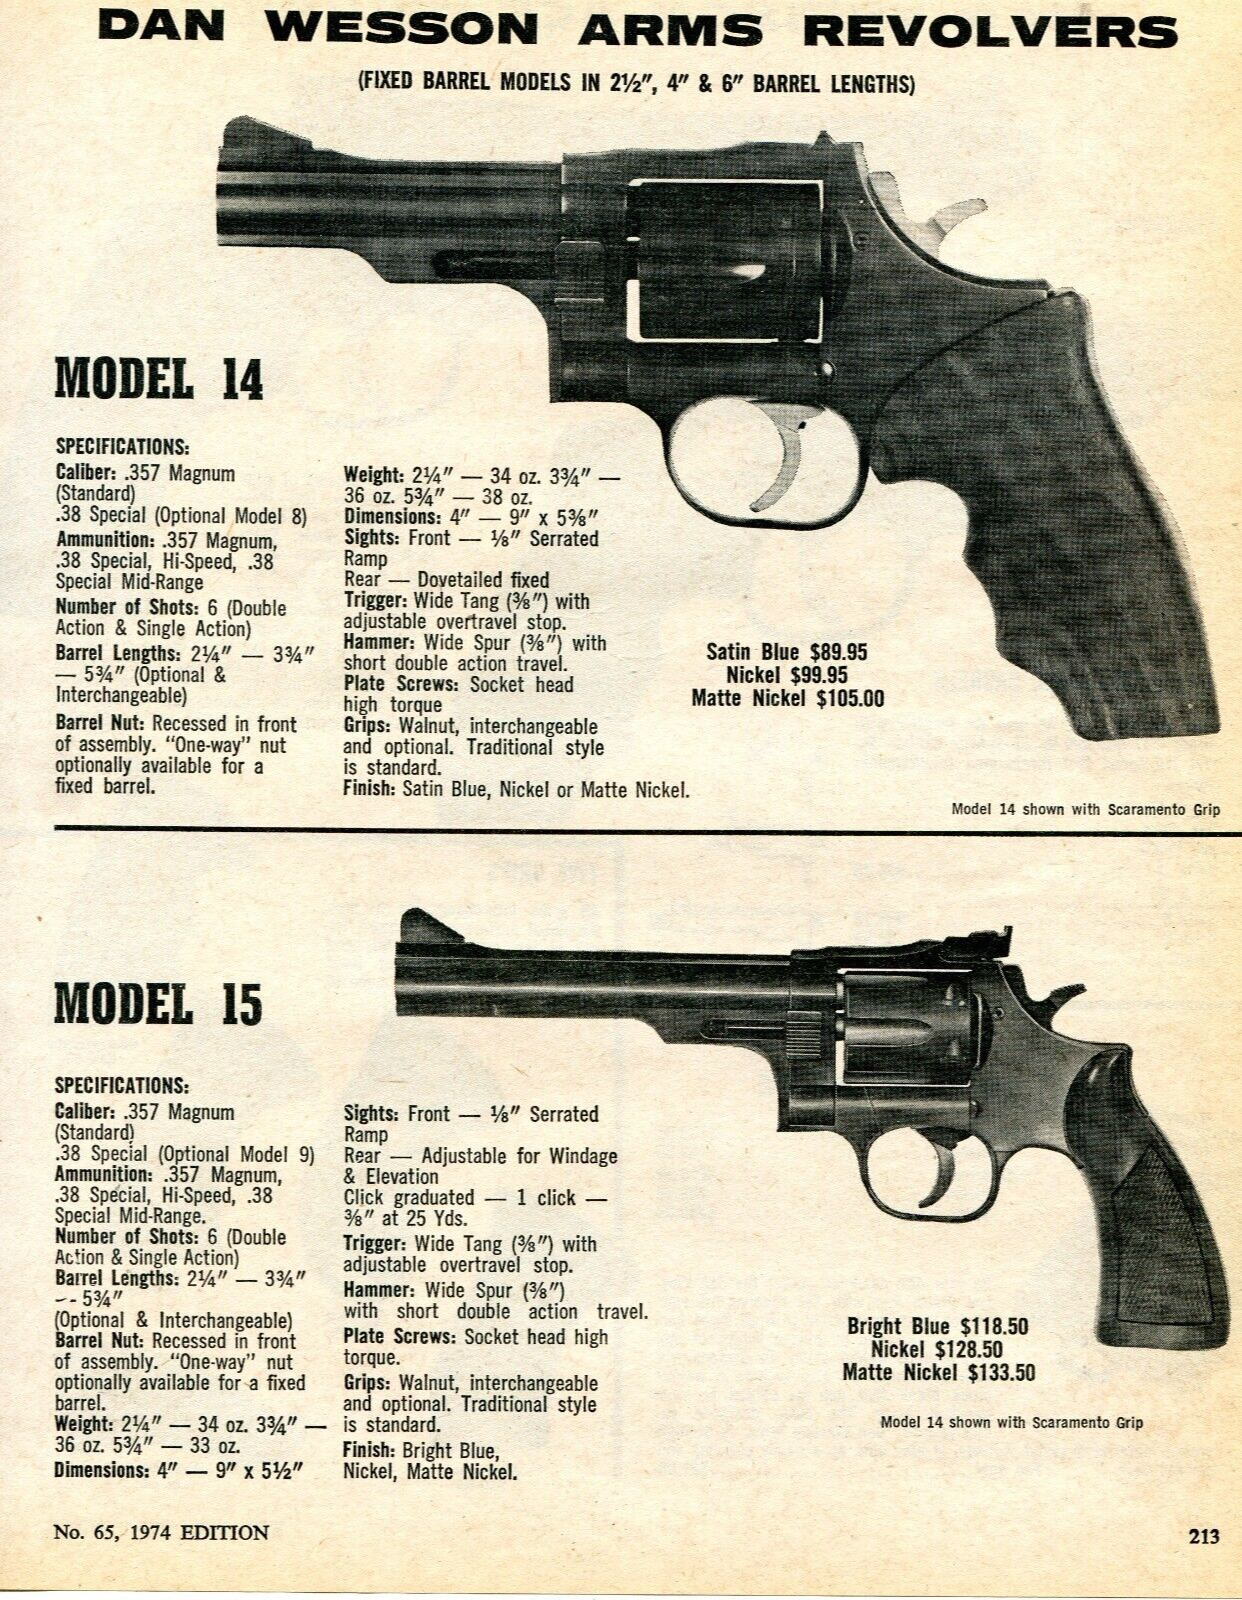 1974 Print Ad of Dan Wesson Arms Model 14 & 15 Revolver